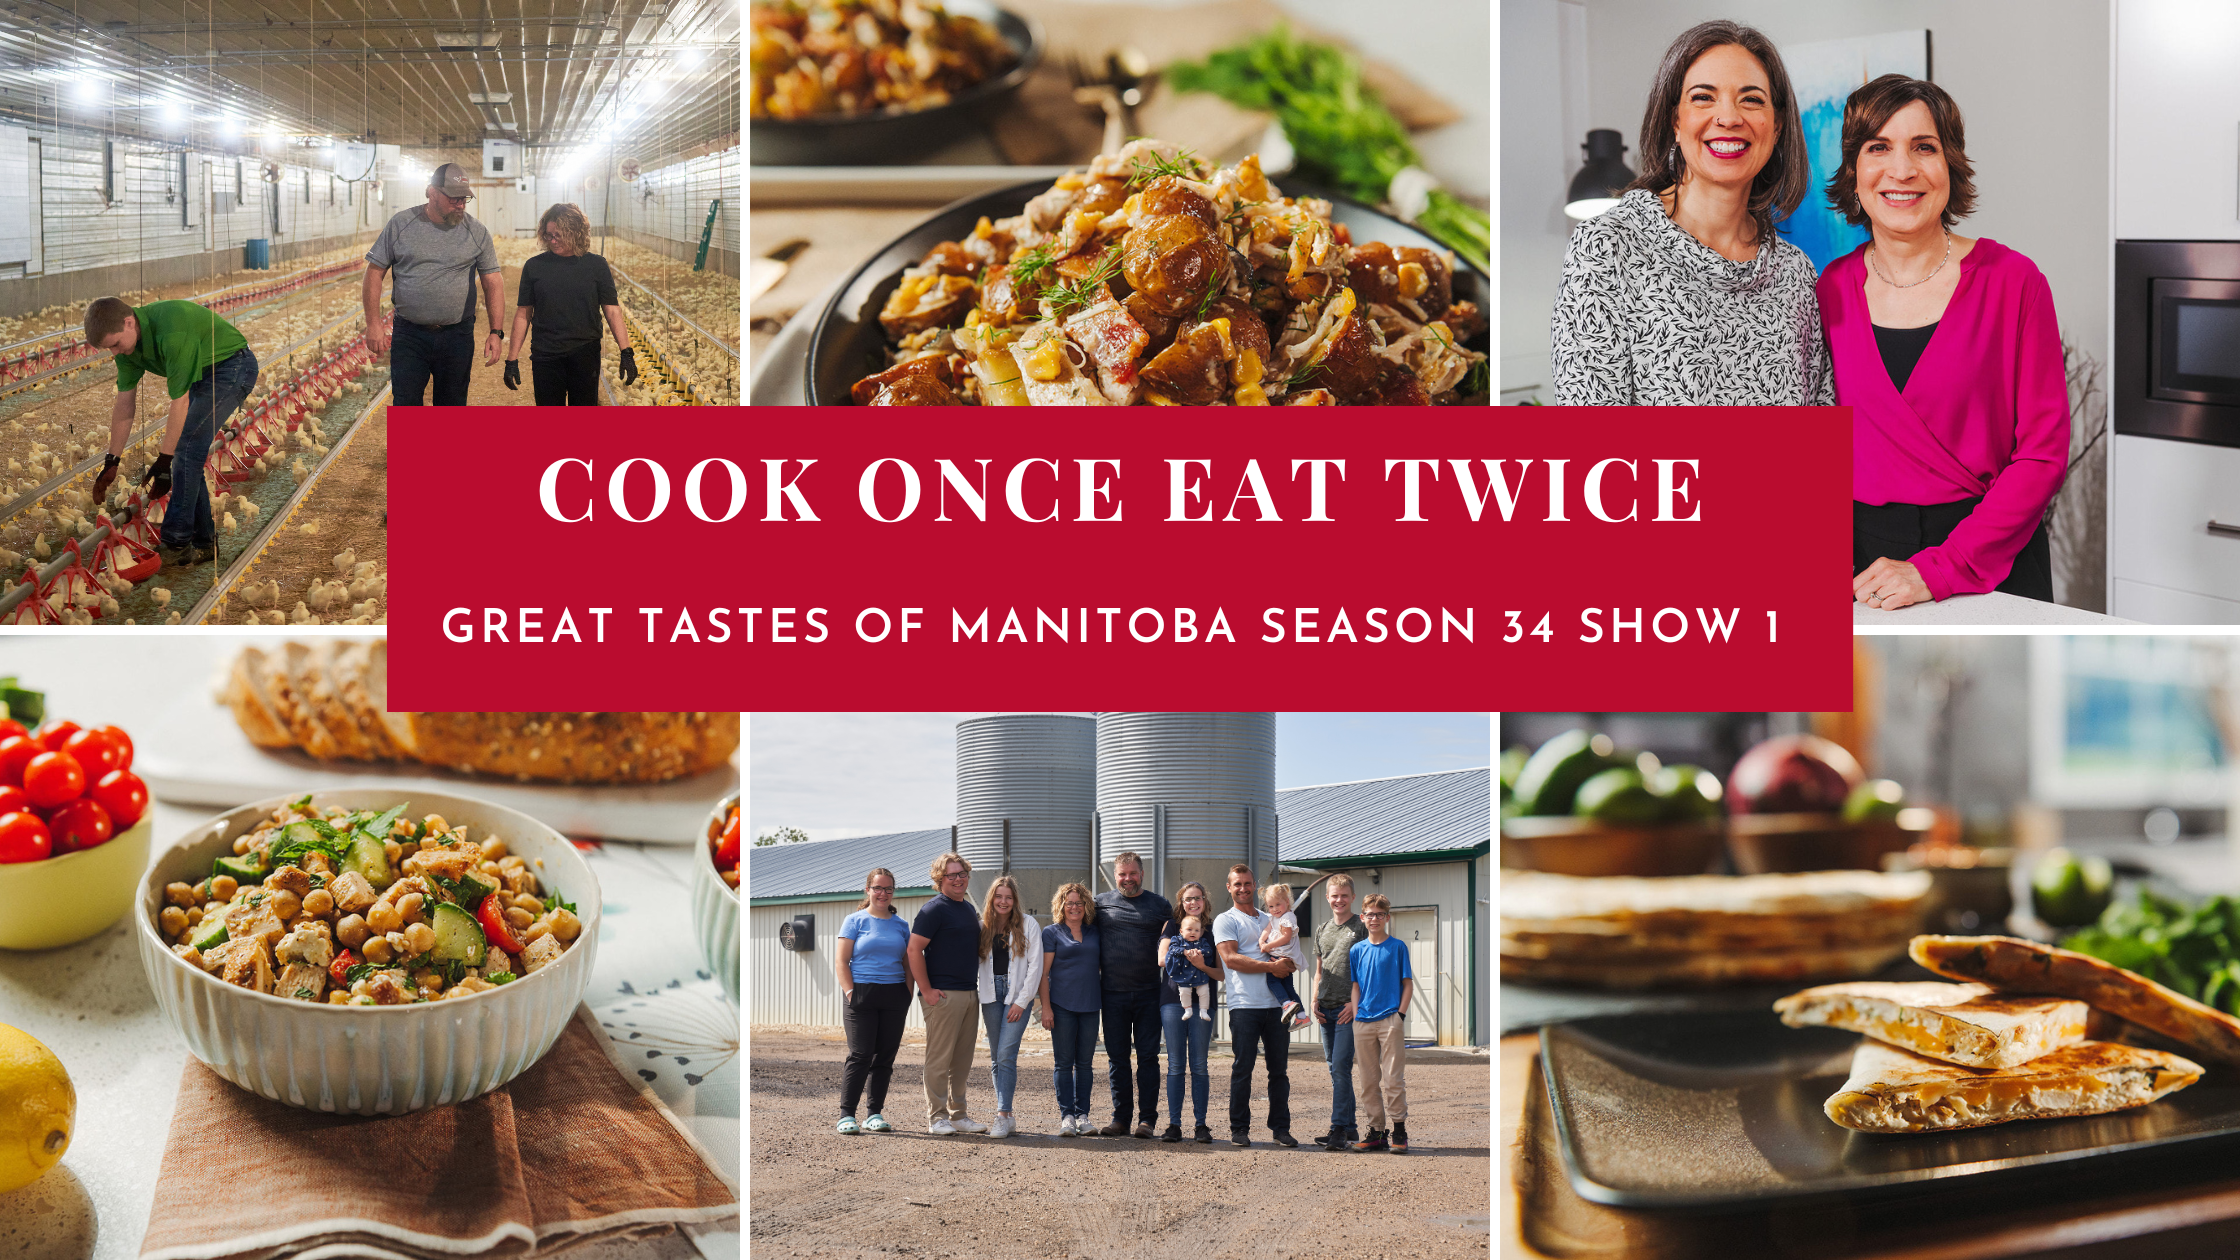 Great Tastes of Manitoba | Manitoba Chicken | Season 34 Show 1